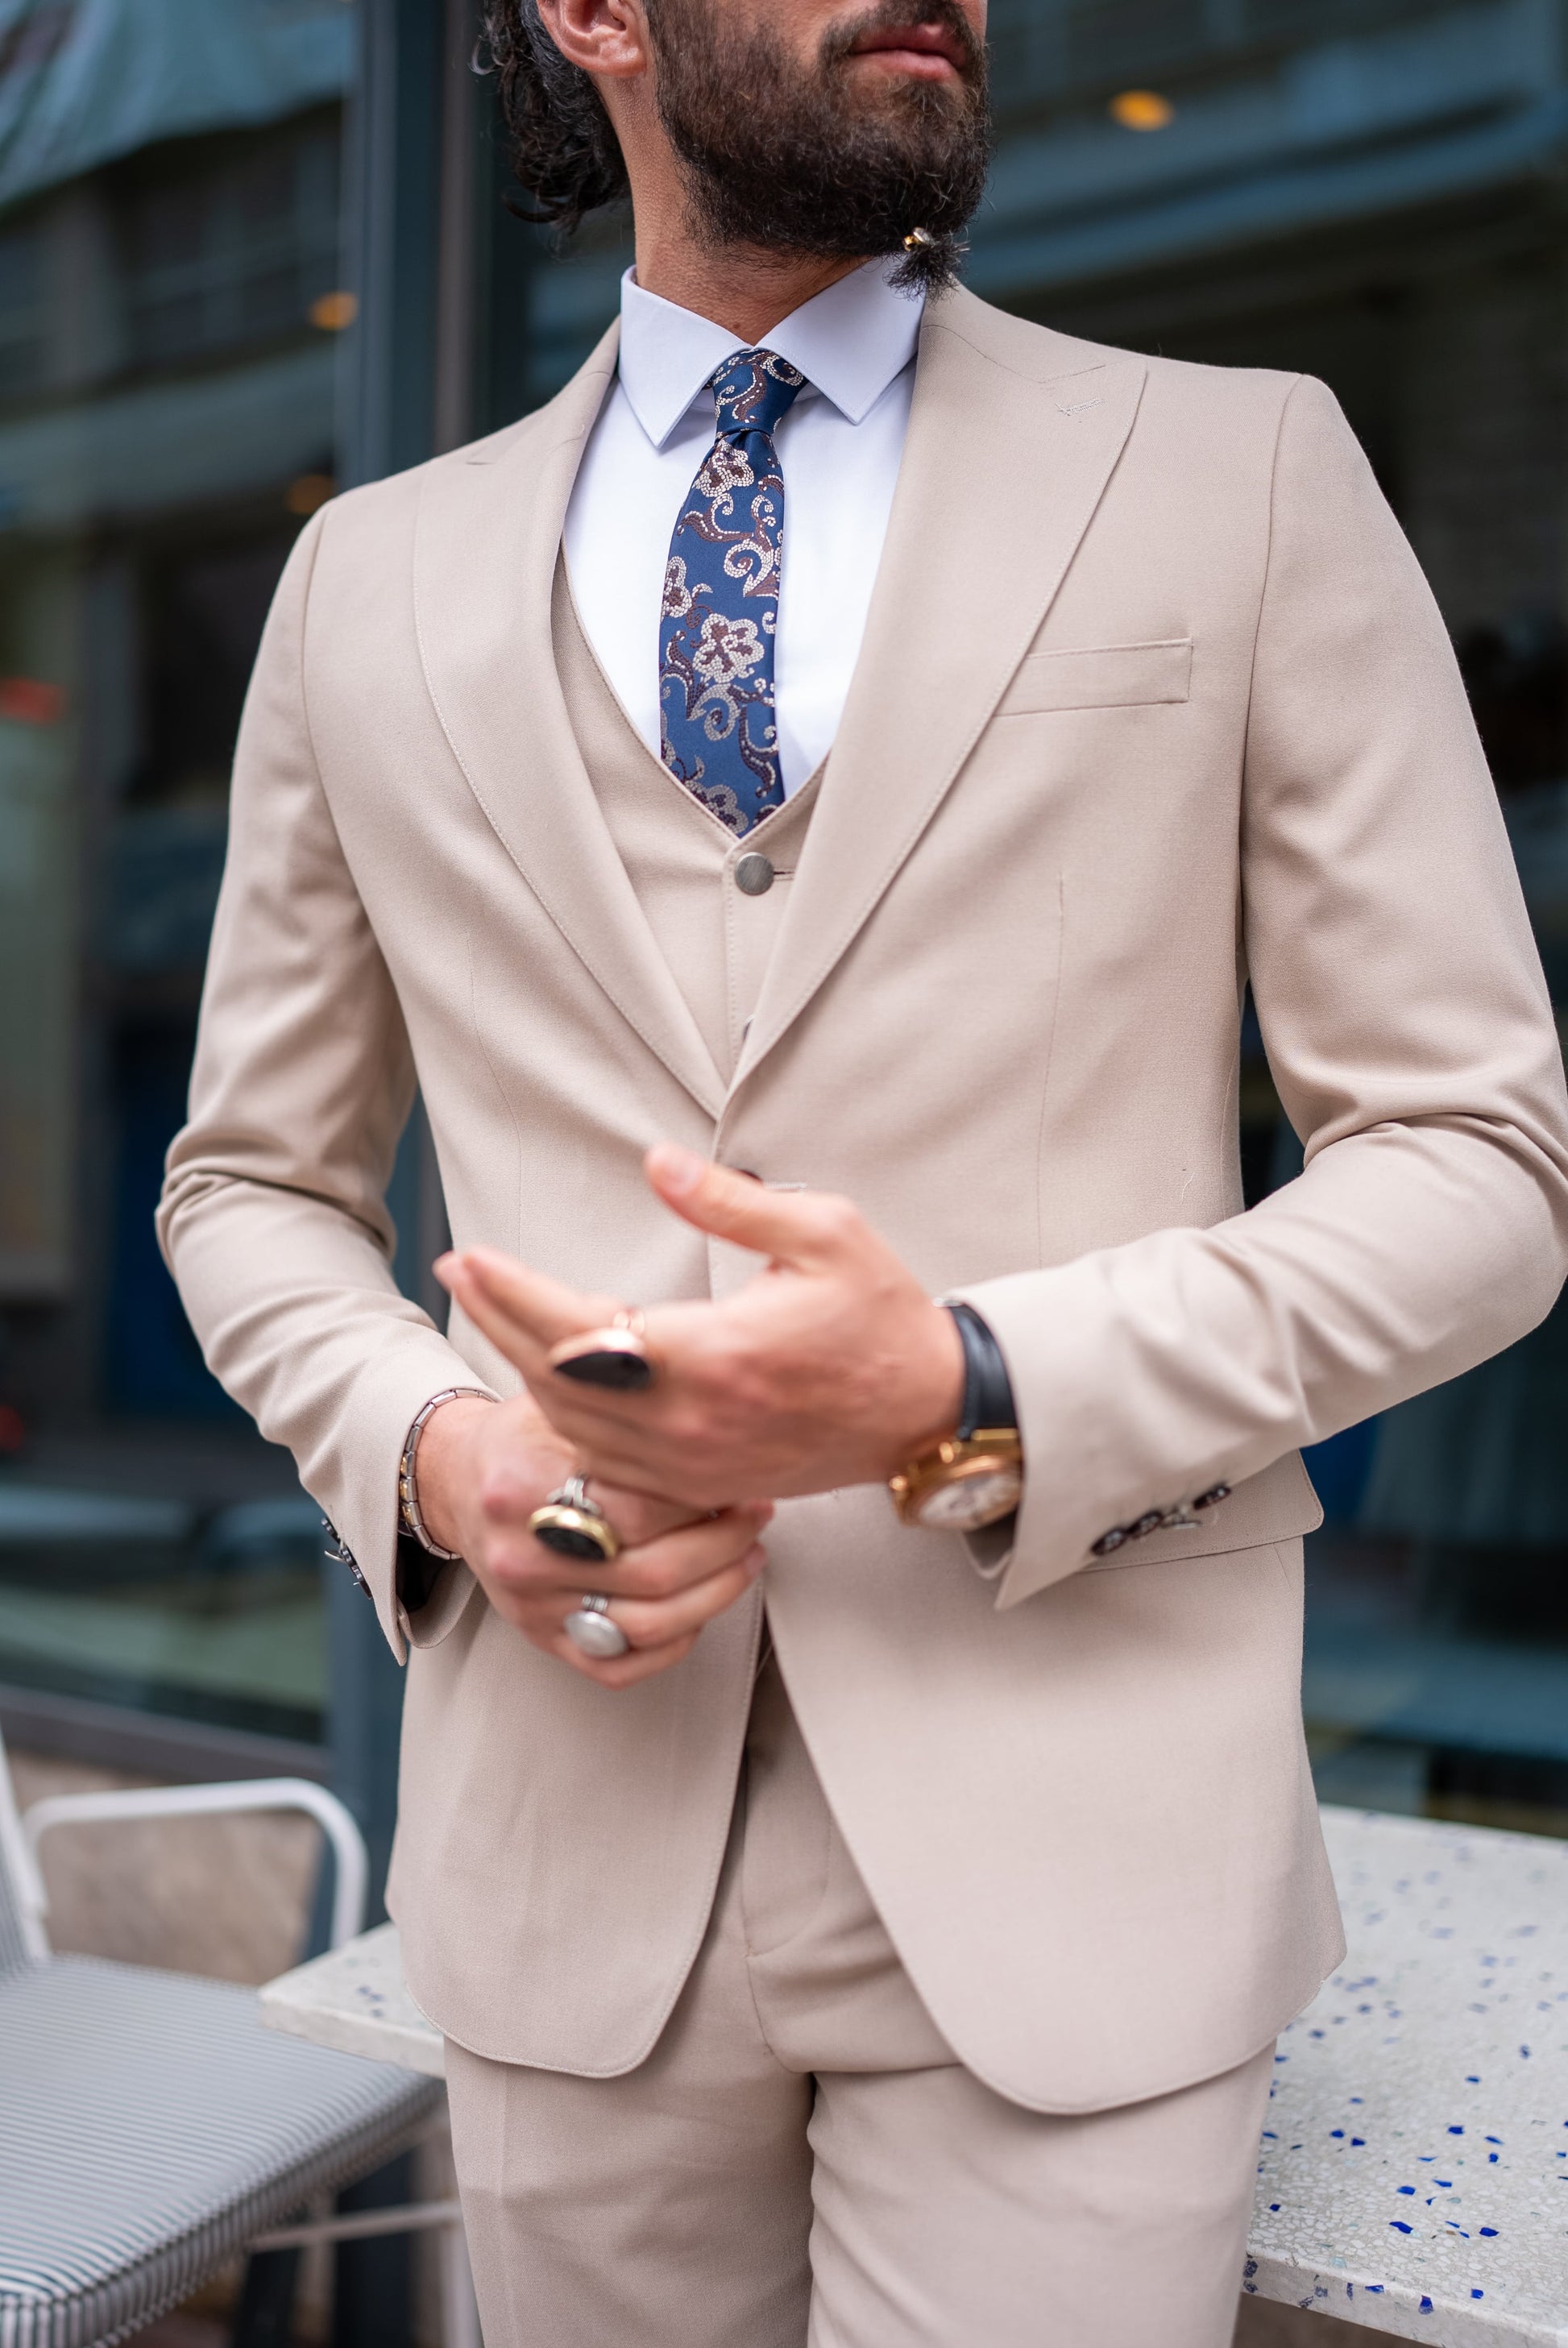 A Beige Suit from HolloMen 